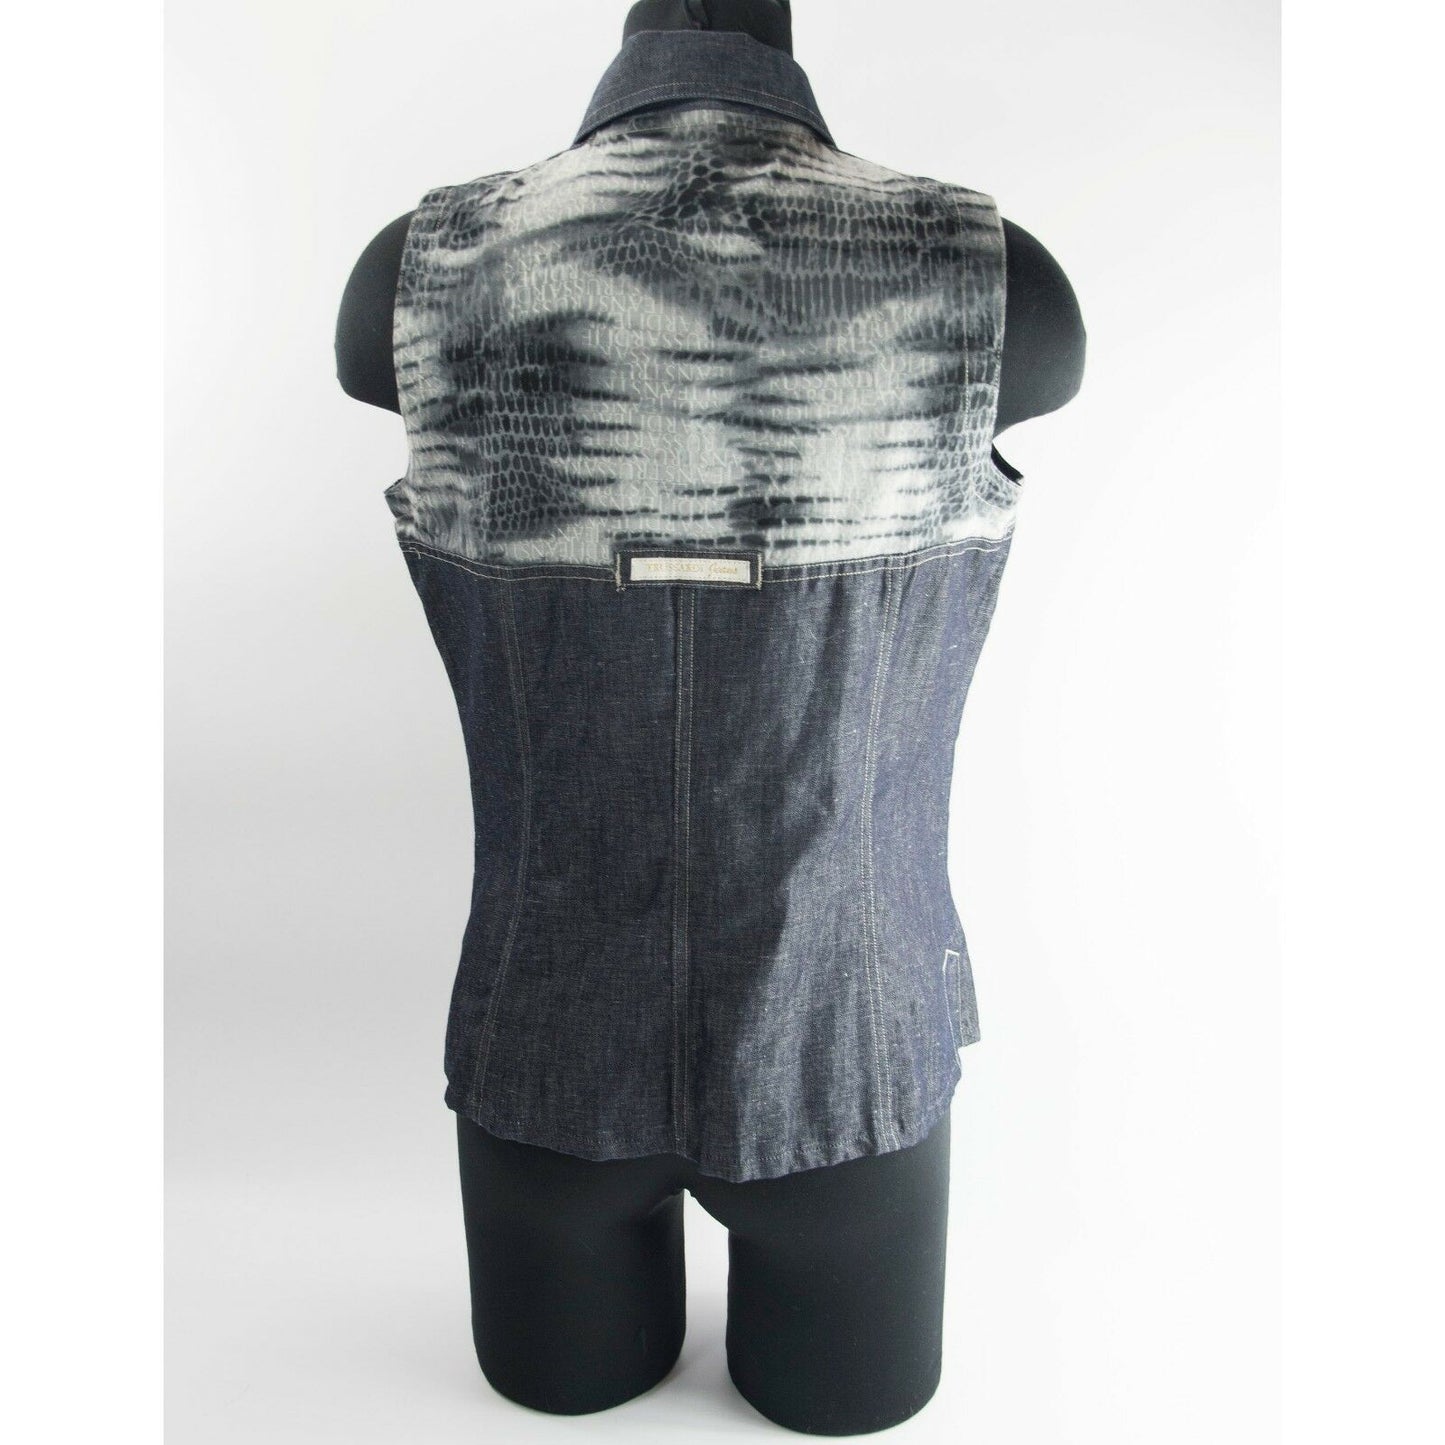 Trussardi Couture Logo Croc Print Black White Dark Blue Denim Jean Vest XL